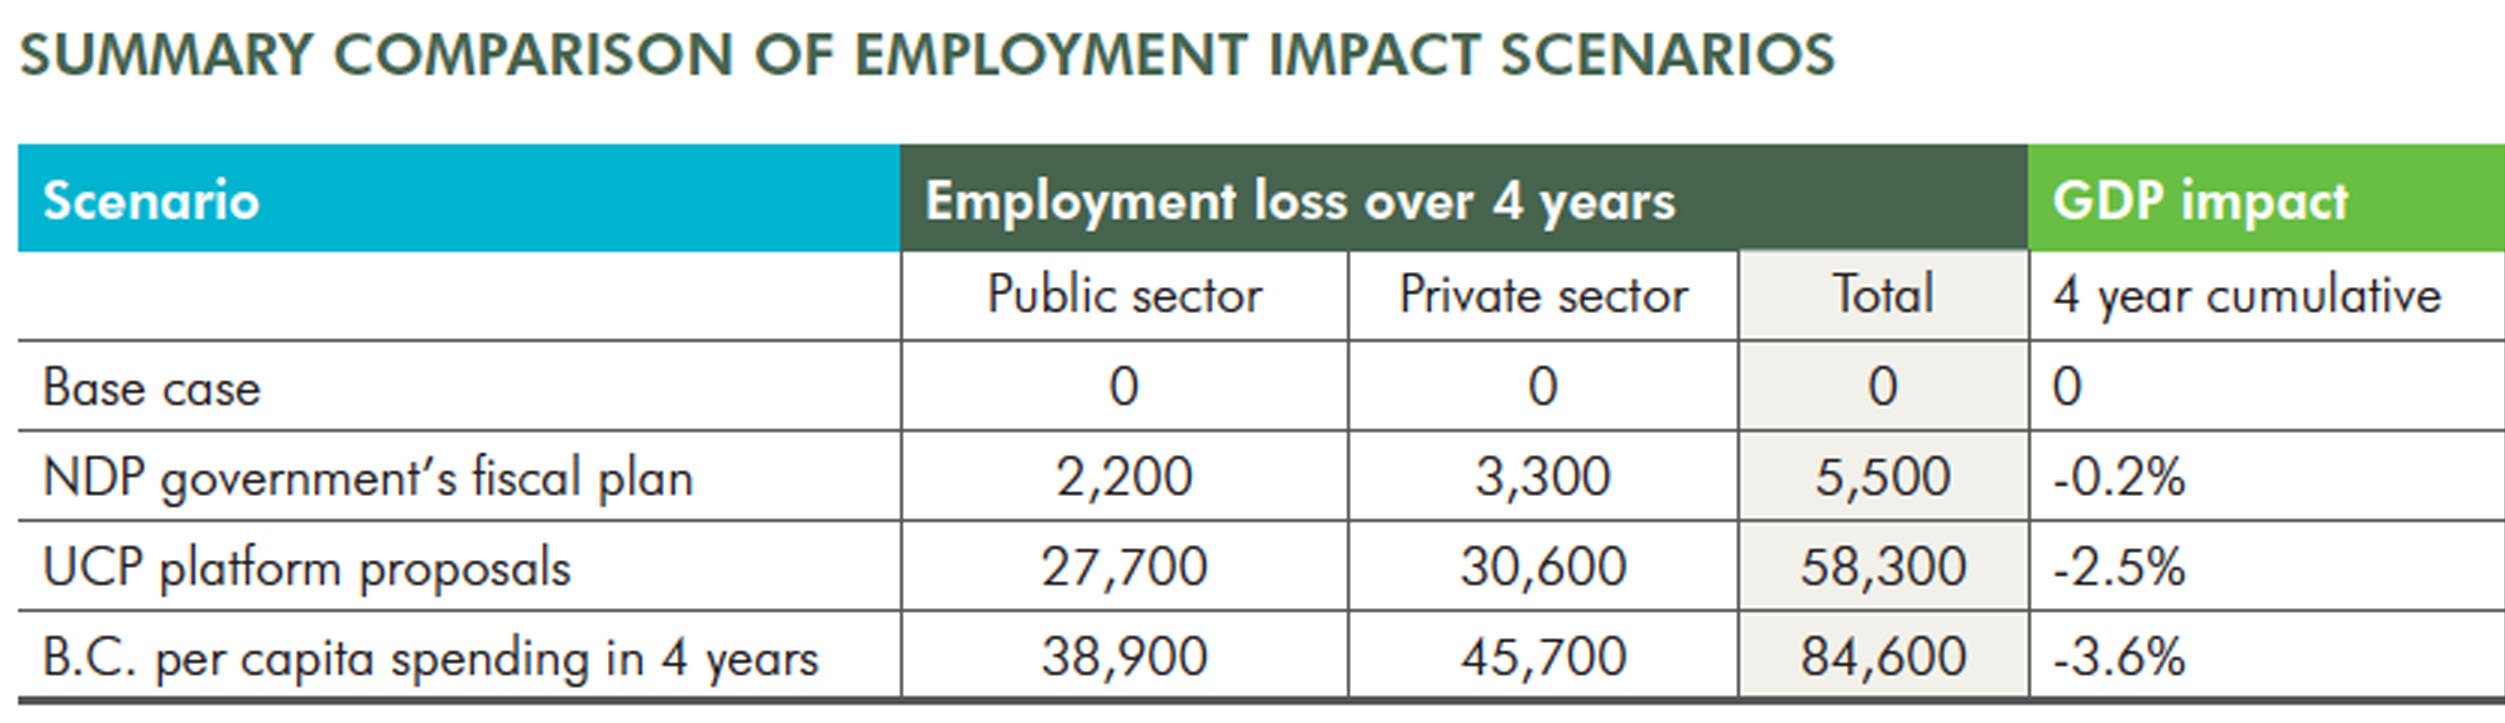 Summary Comparison of Employment Impact Scenarios